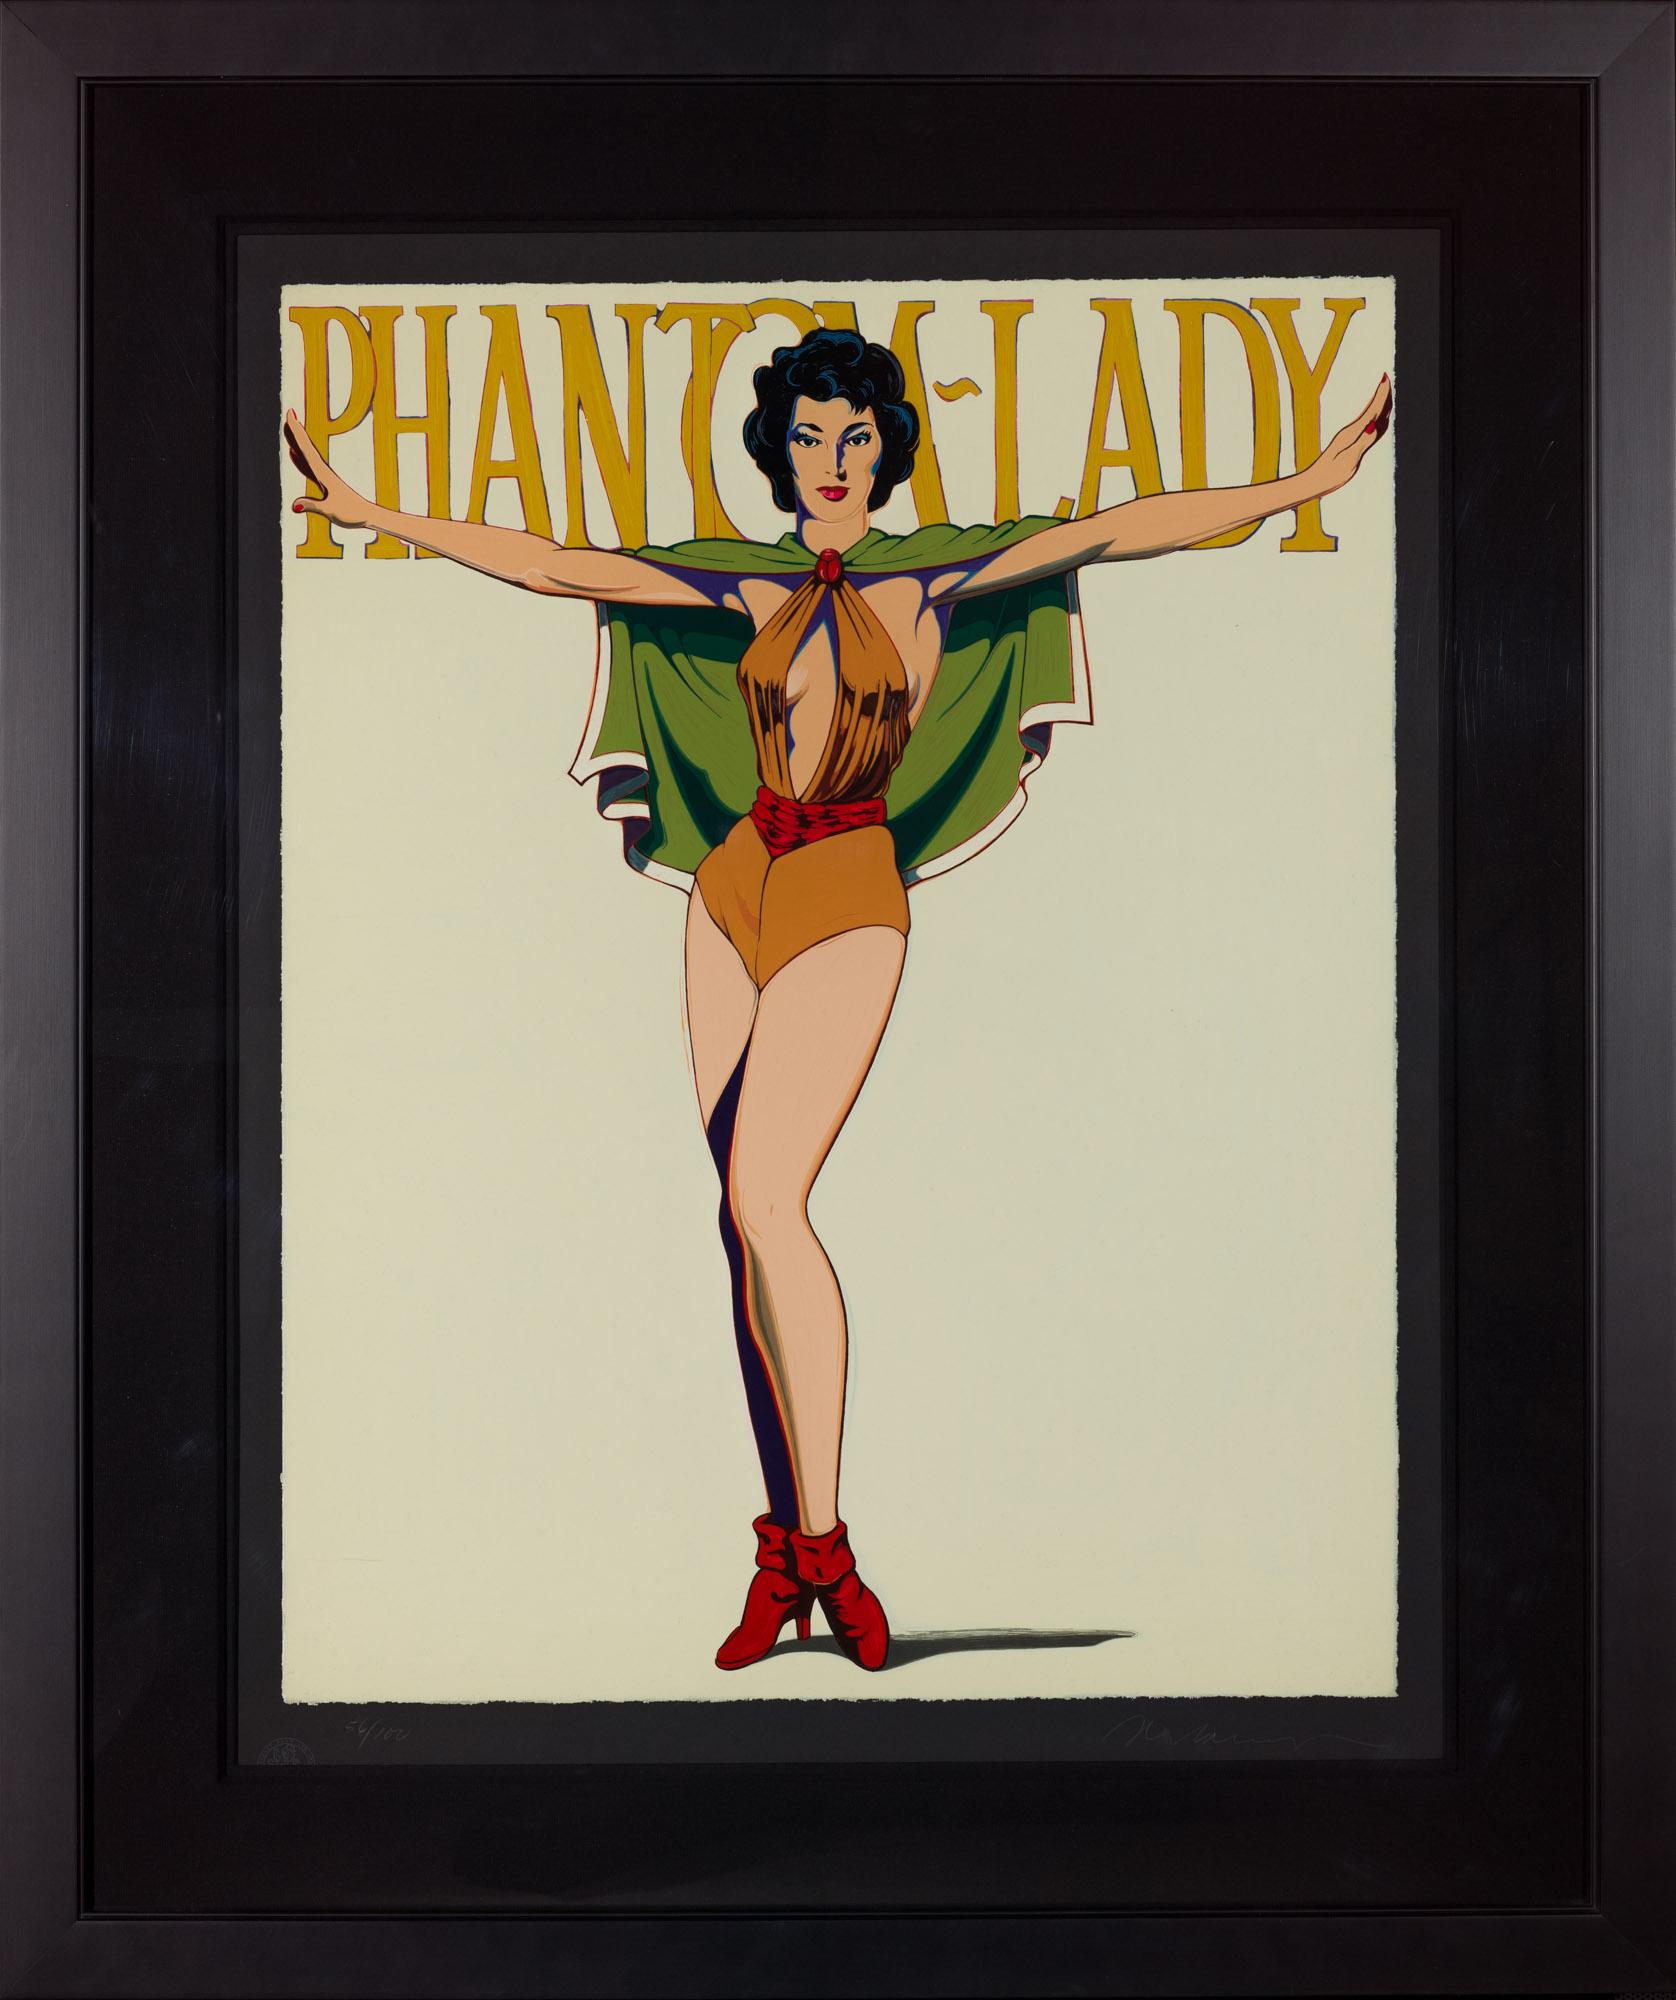 Phantom Lady - Print by Mel Ramos